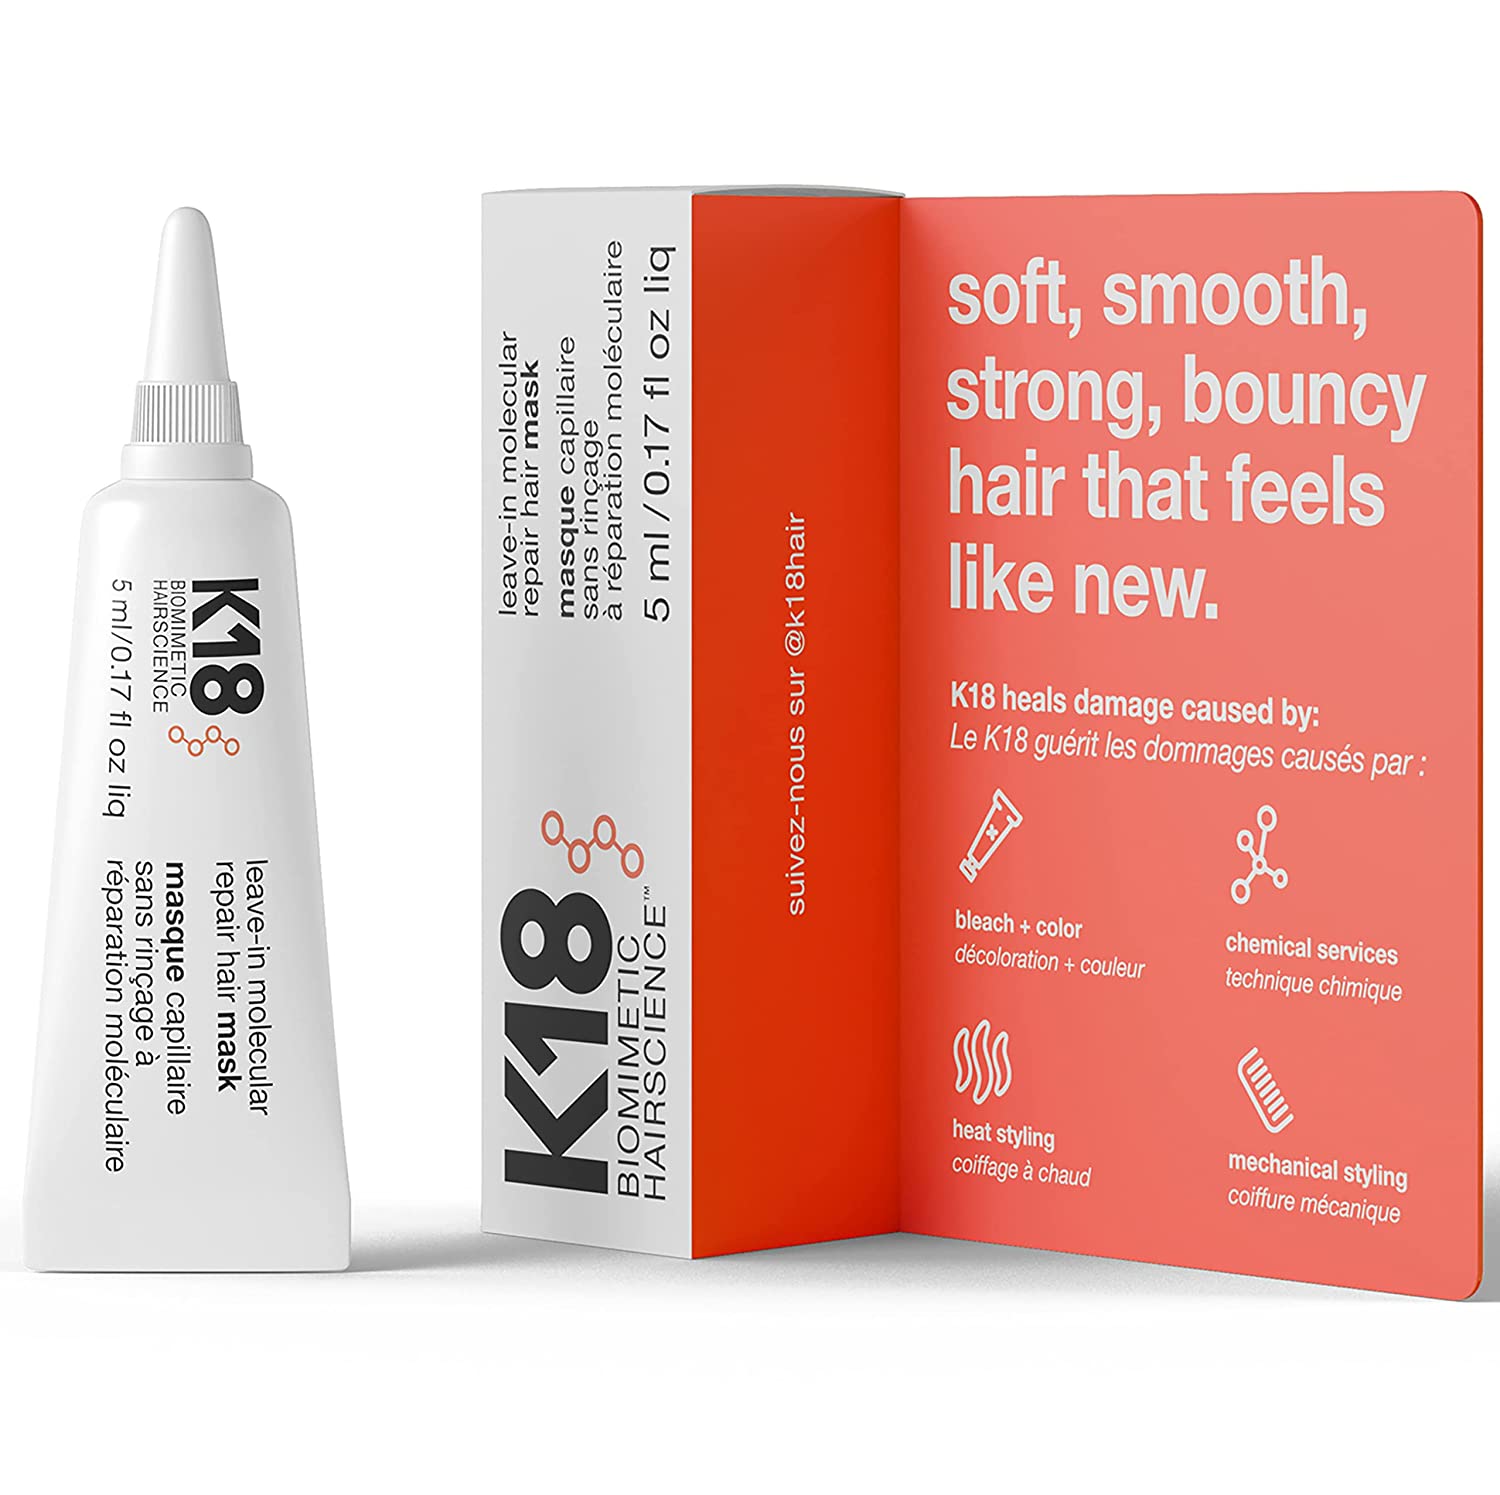 K18 LEAVE-IN MOLECULAR REPAIR HAIR MASK (Buy 3 Get 1 Free Mix & Match)